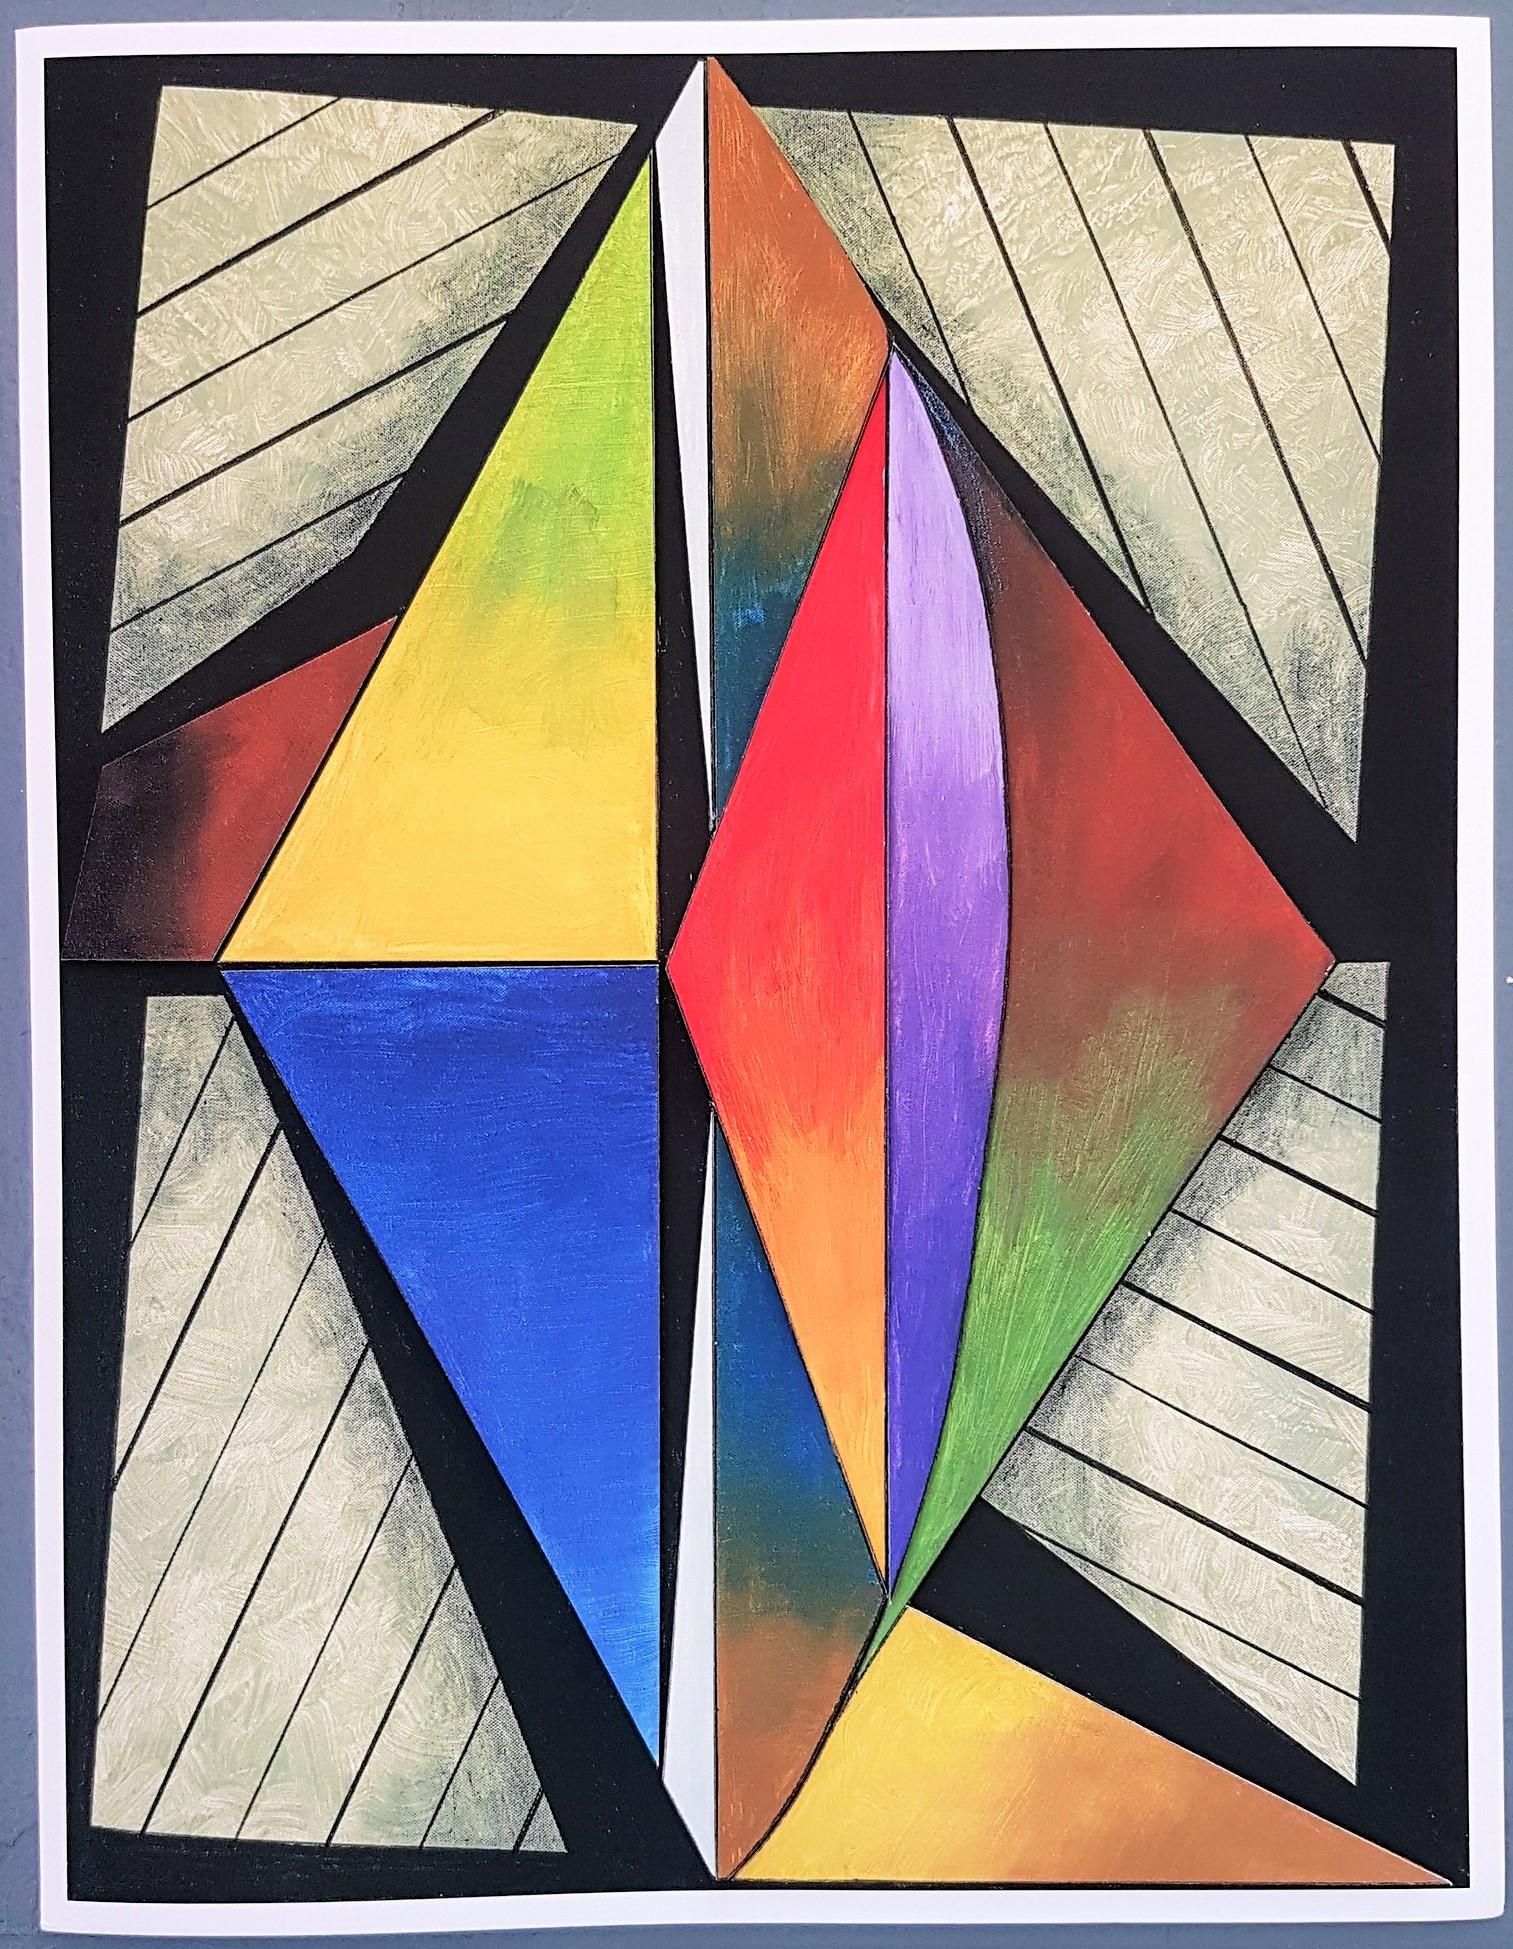 Geometric Composition #2 (3D-construction, Op Art, Lyonel Feininger) - Print by Eduard Diem 